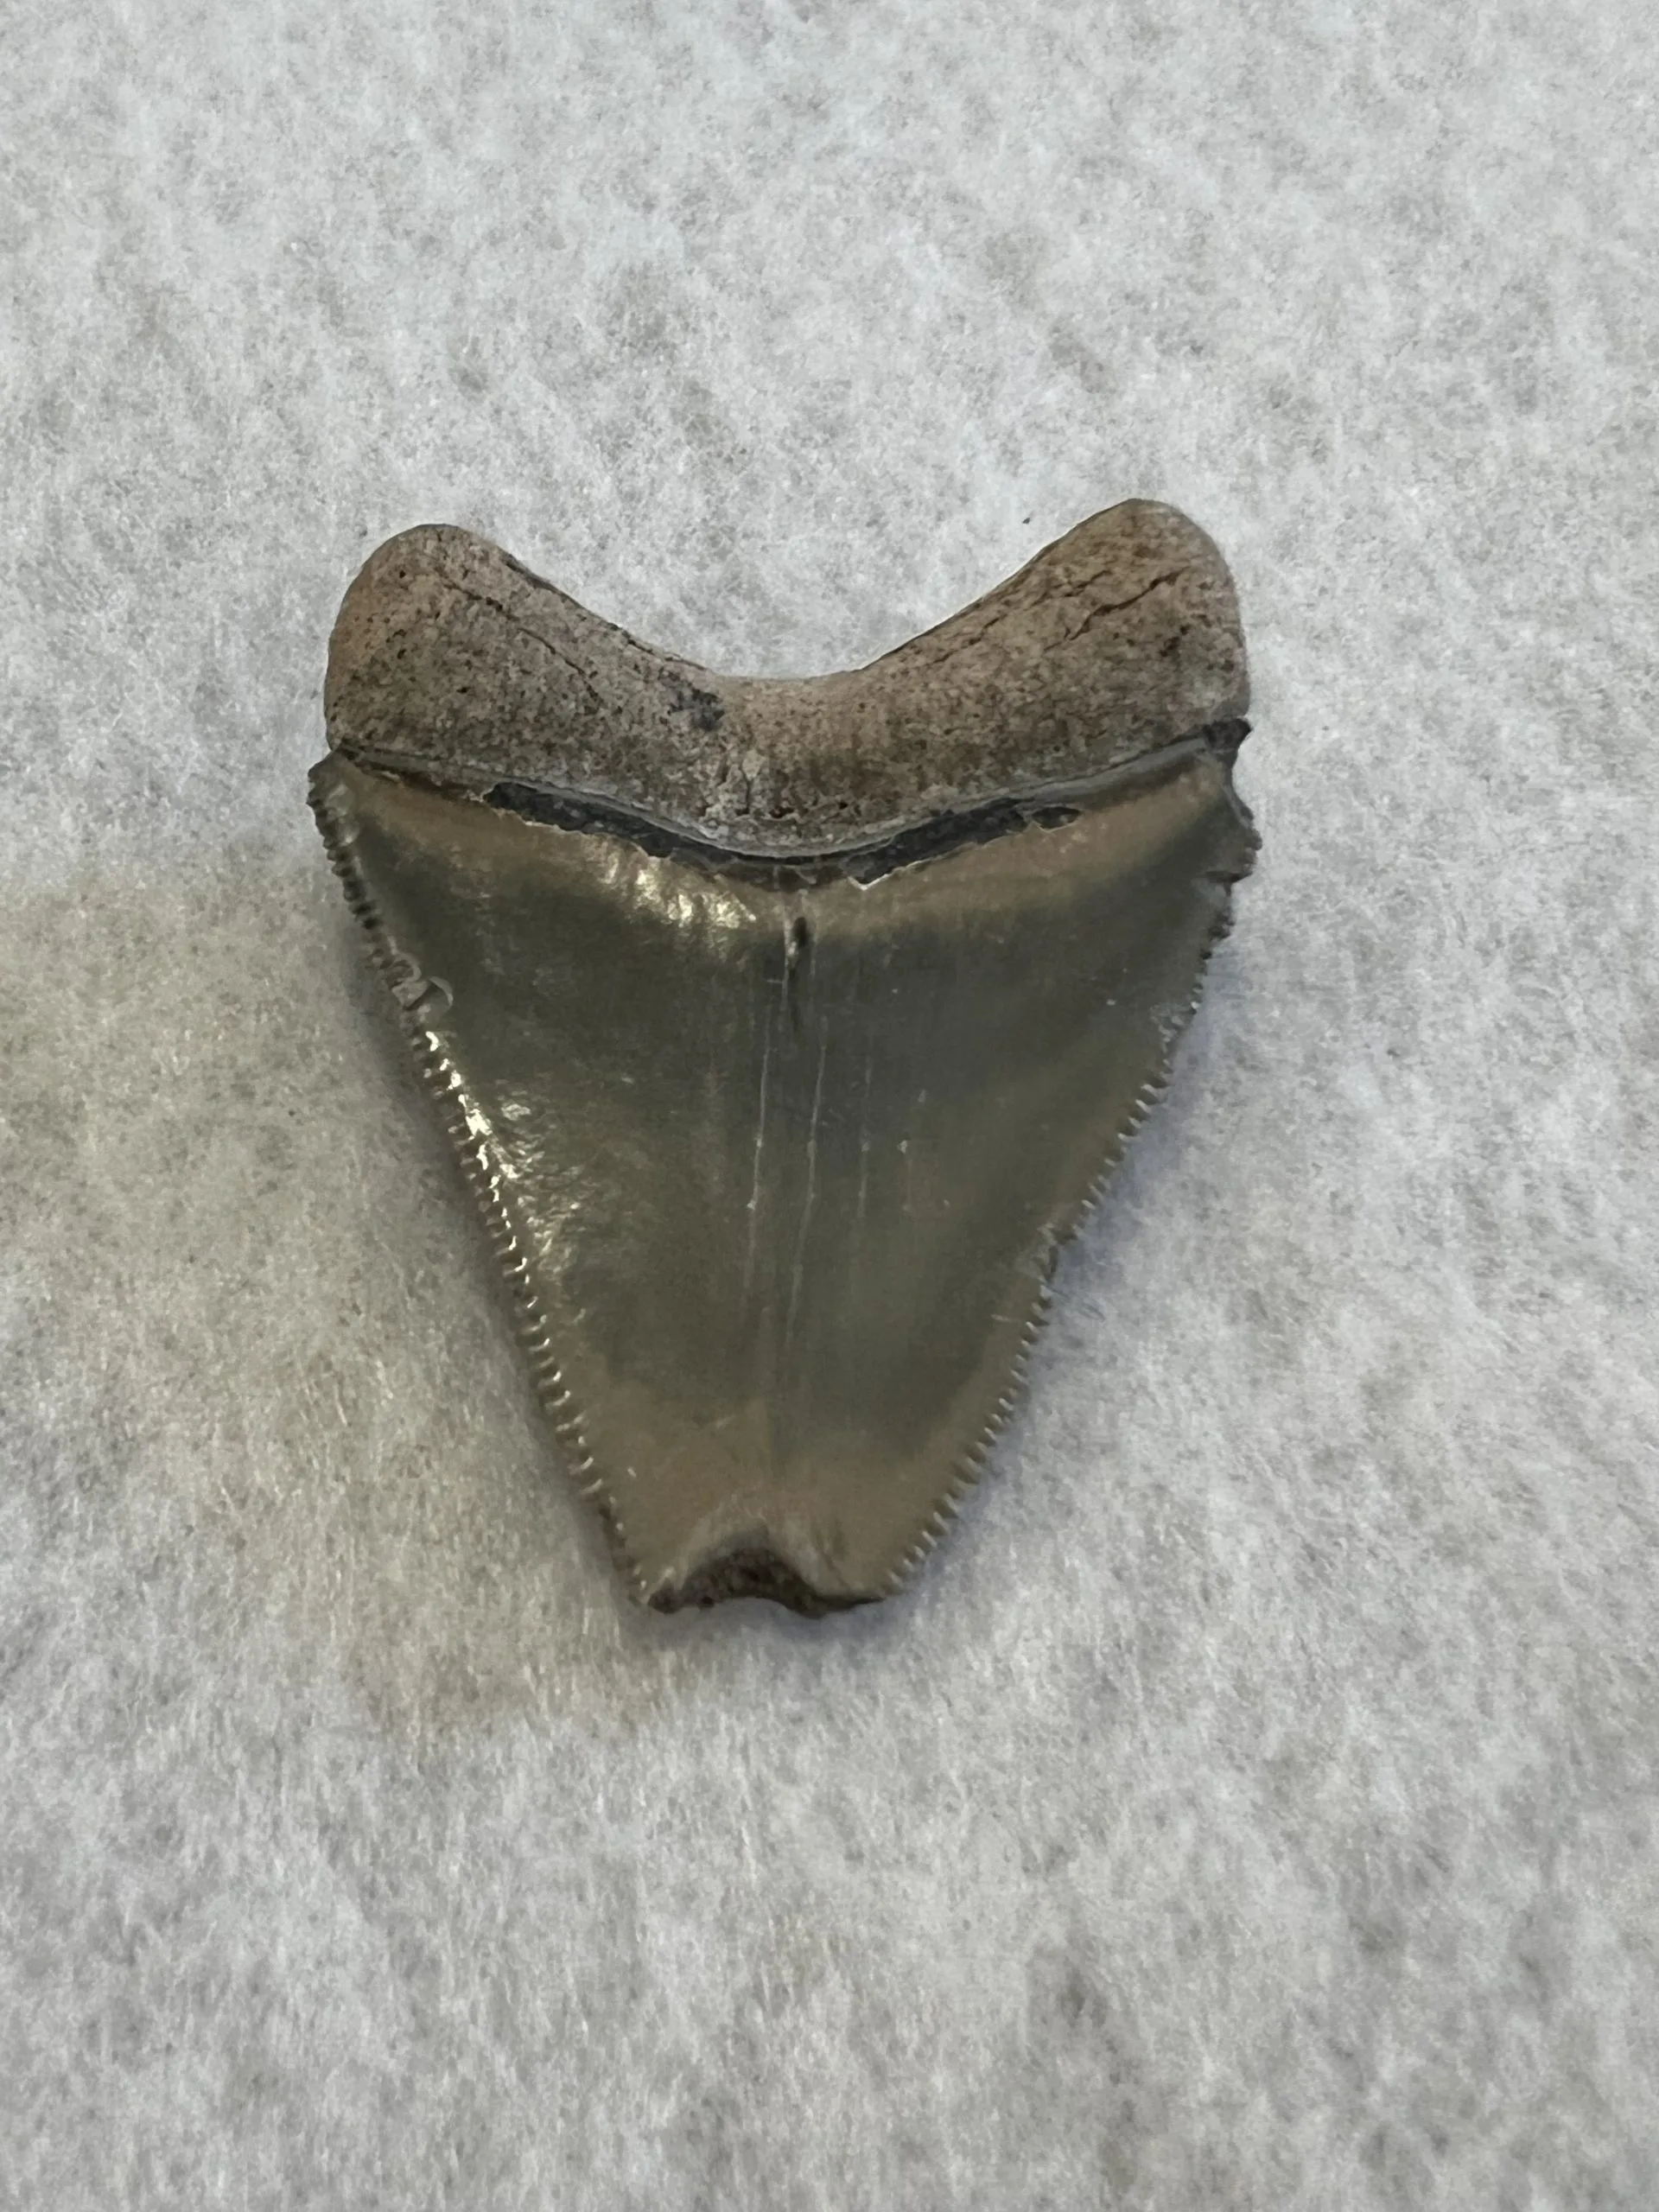 Megalodon Tooth  Bone Valley, Florida 1.82 inch Prehistoric Online